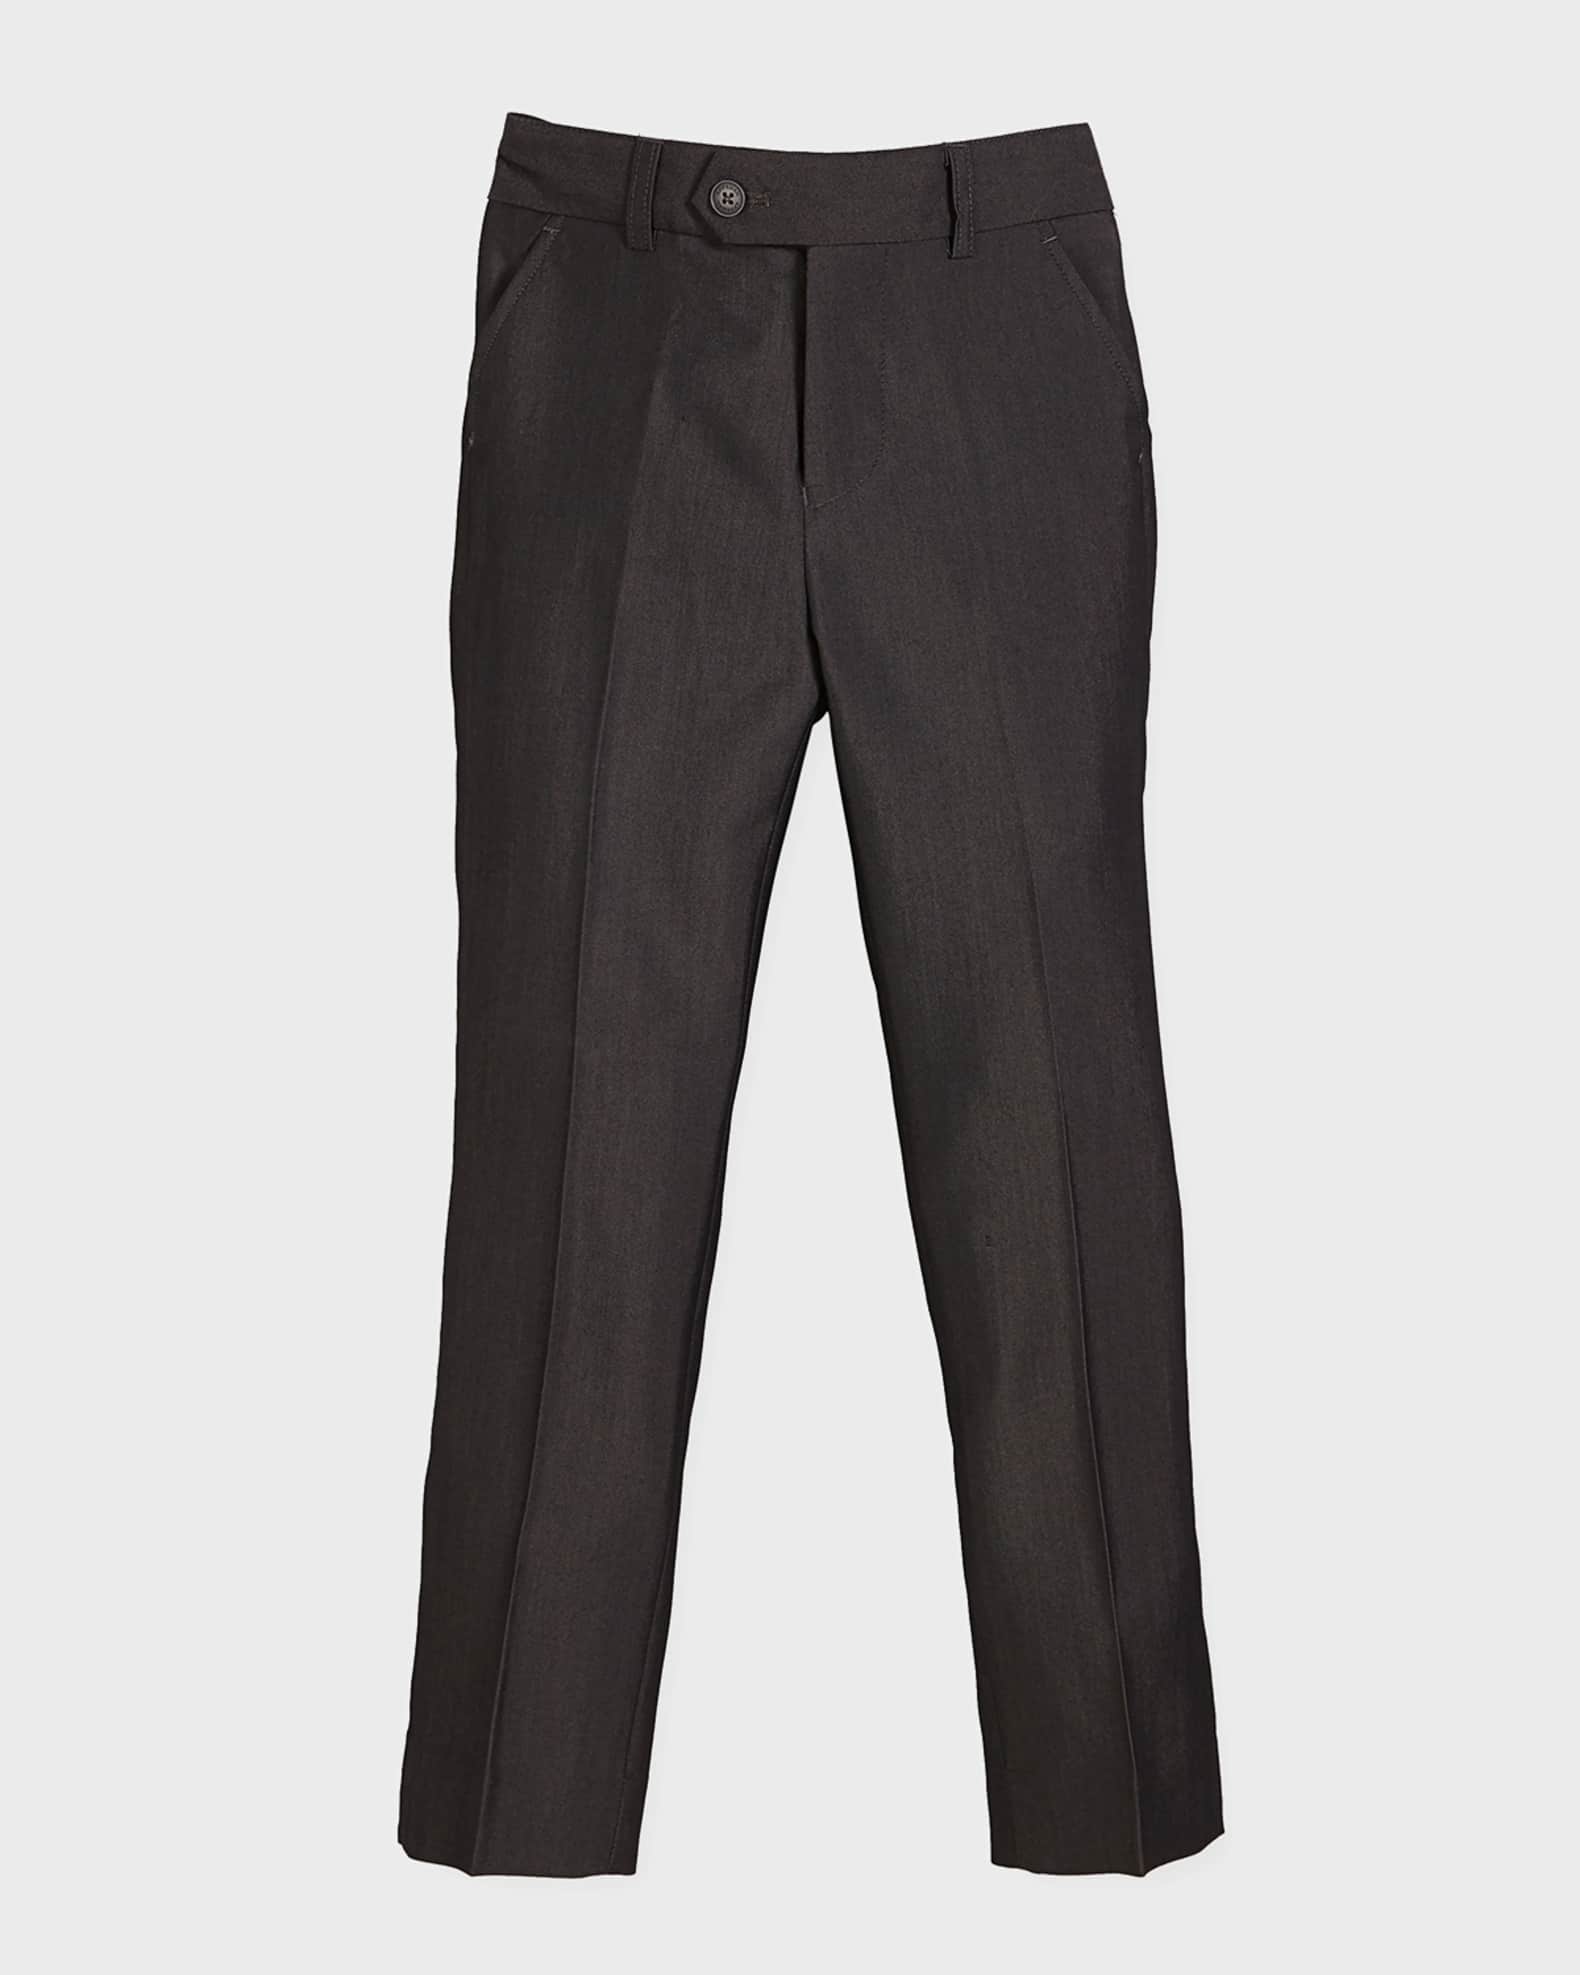 Appaman Slim Suit Pants, Charcoal, Size 4-14 | Neiman Marcus